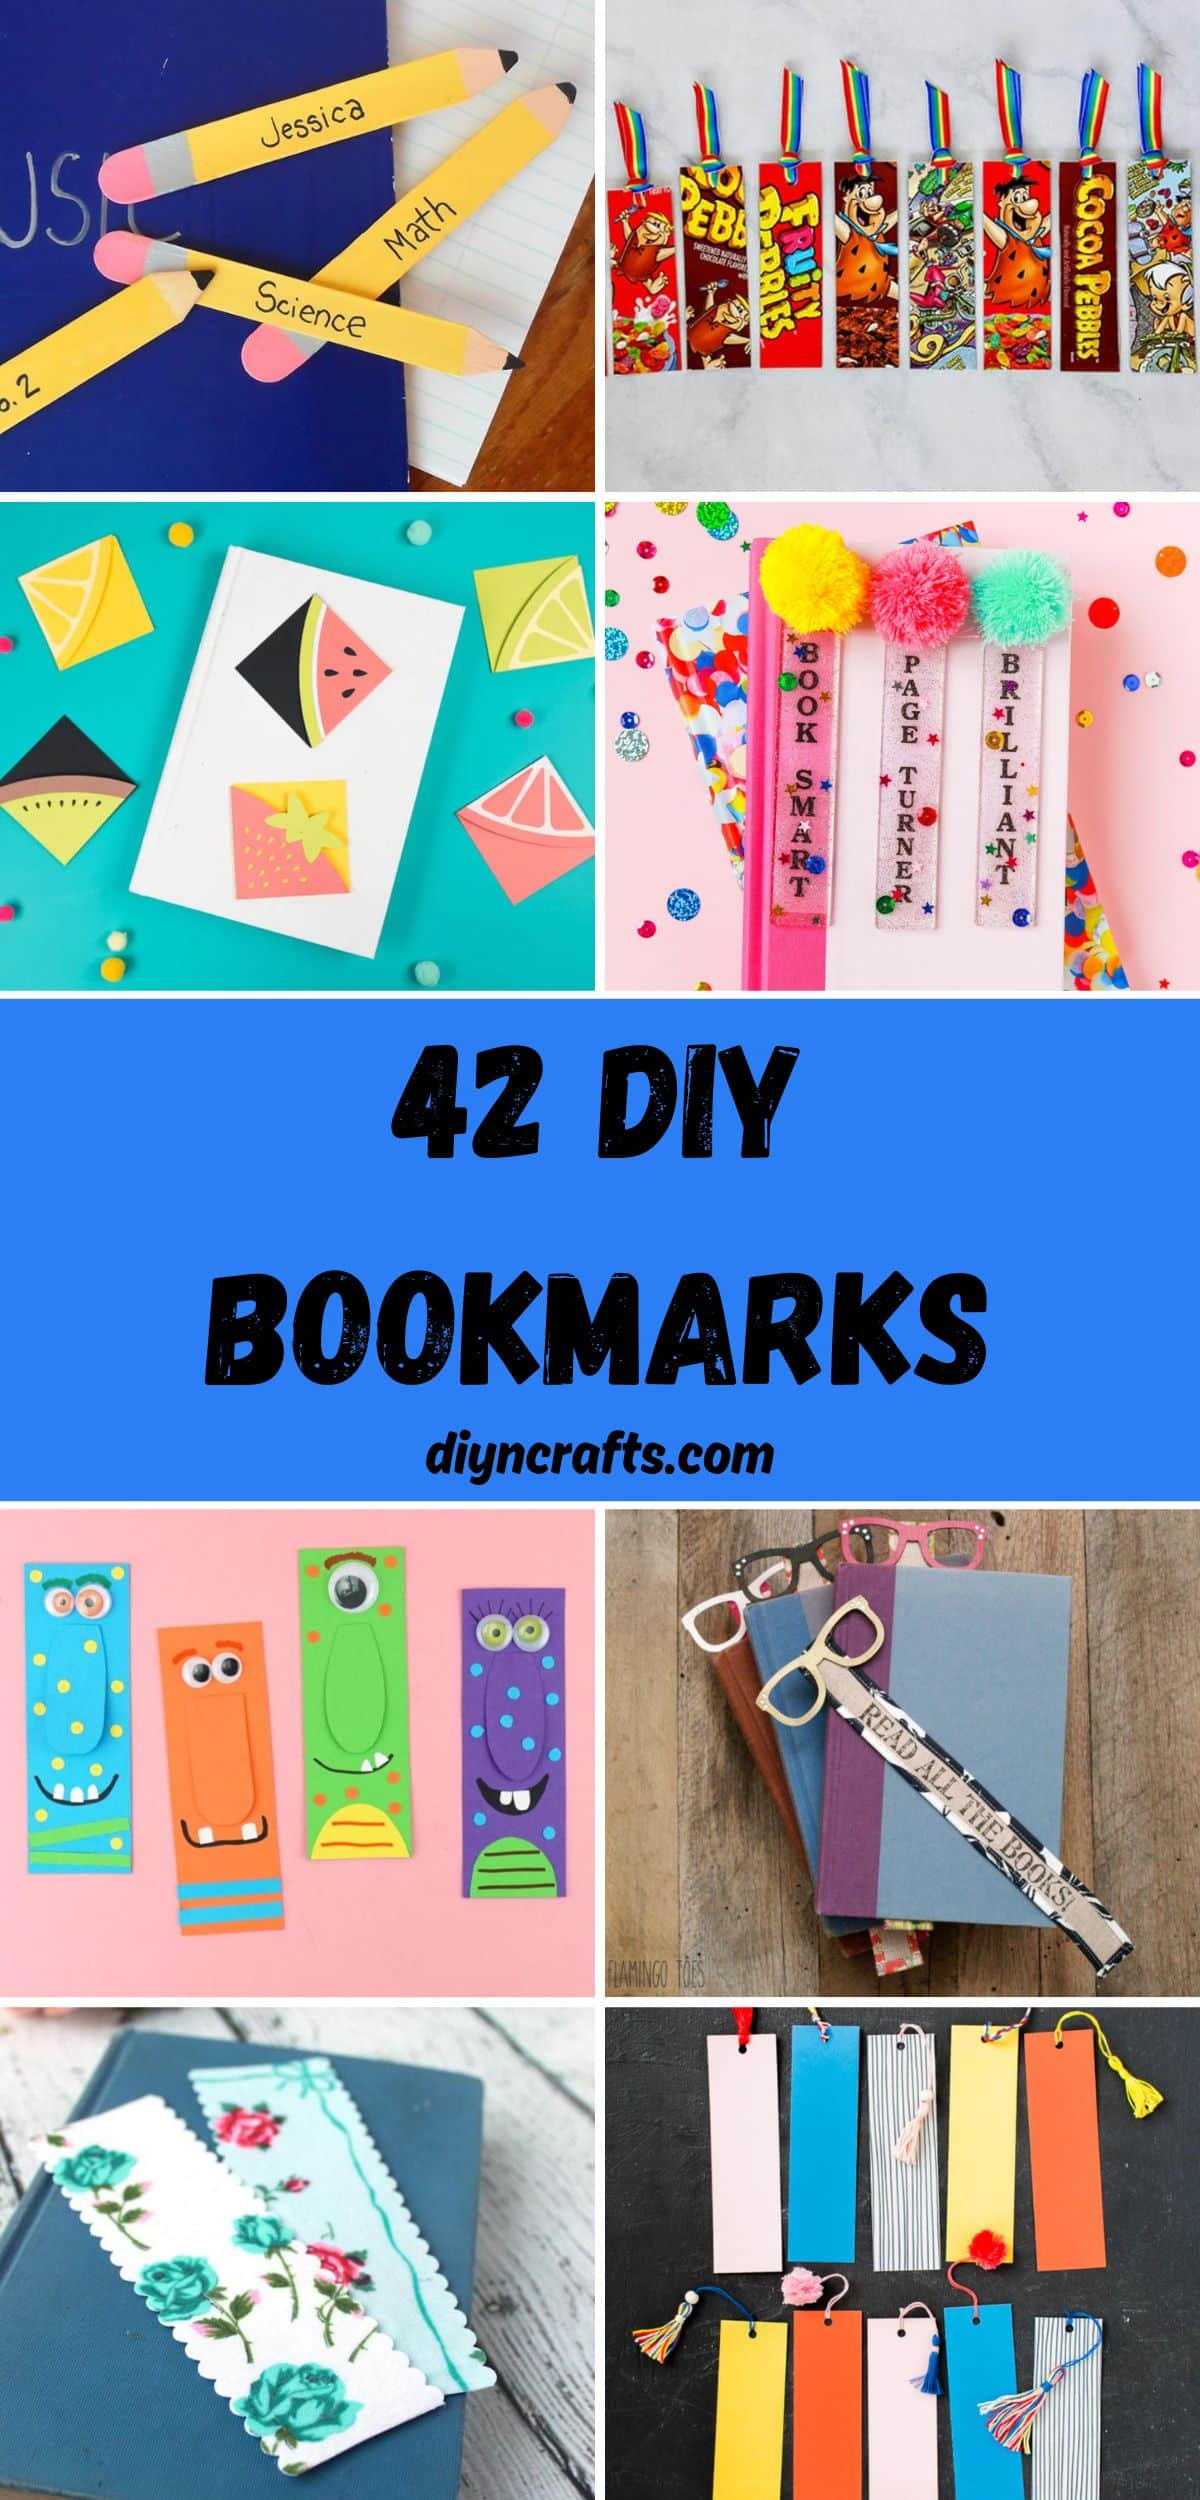 42 DIY Bookmarks collage.